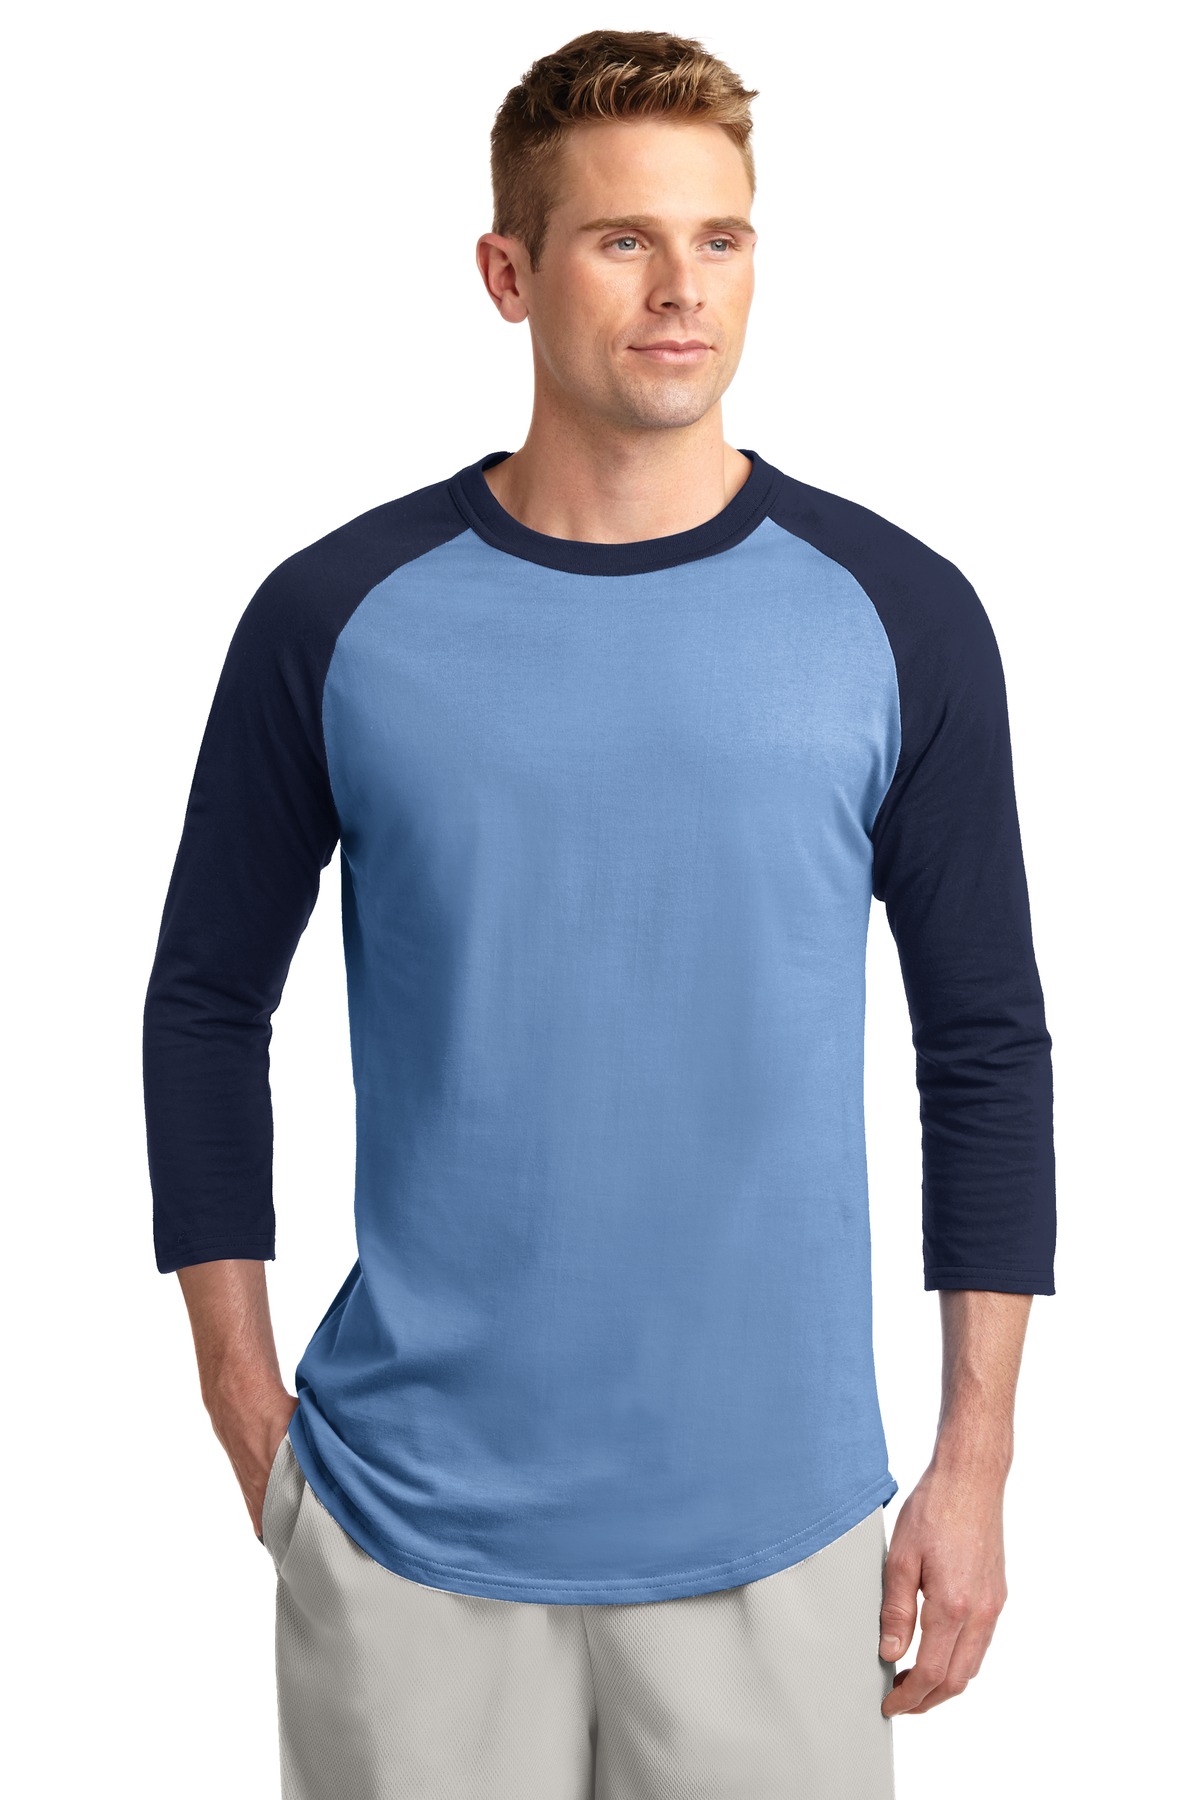 3/4 Sleeve Raglan Shirt Athletic Baseball Jersey Mens Georgia-Institute-of-Technology